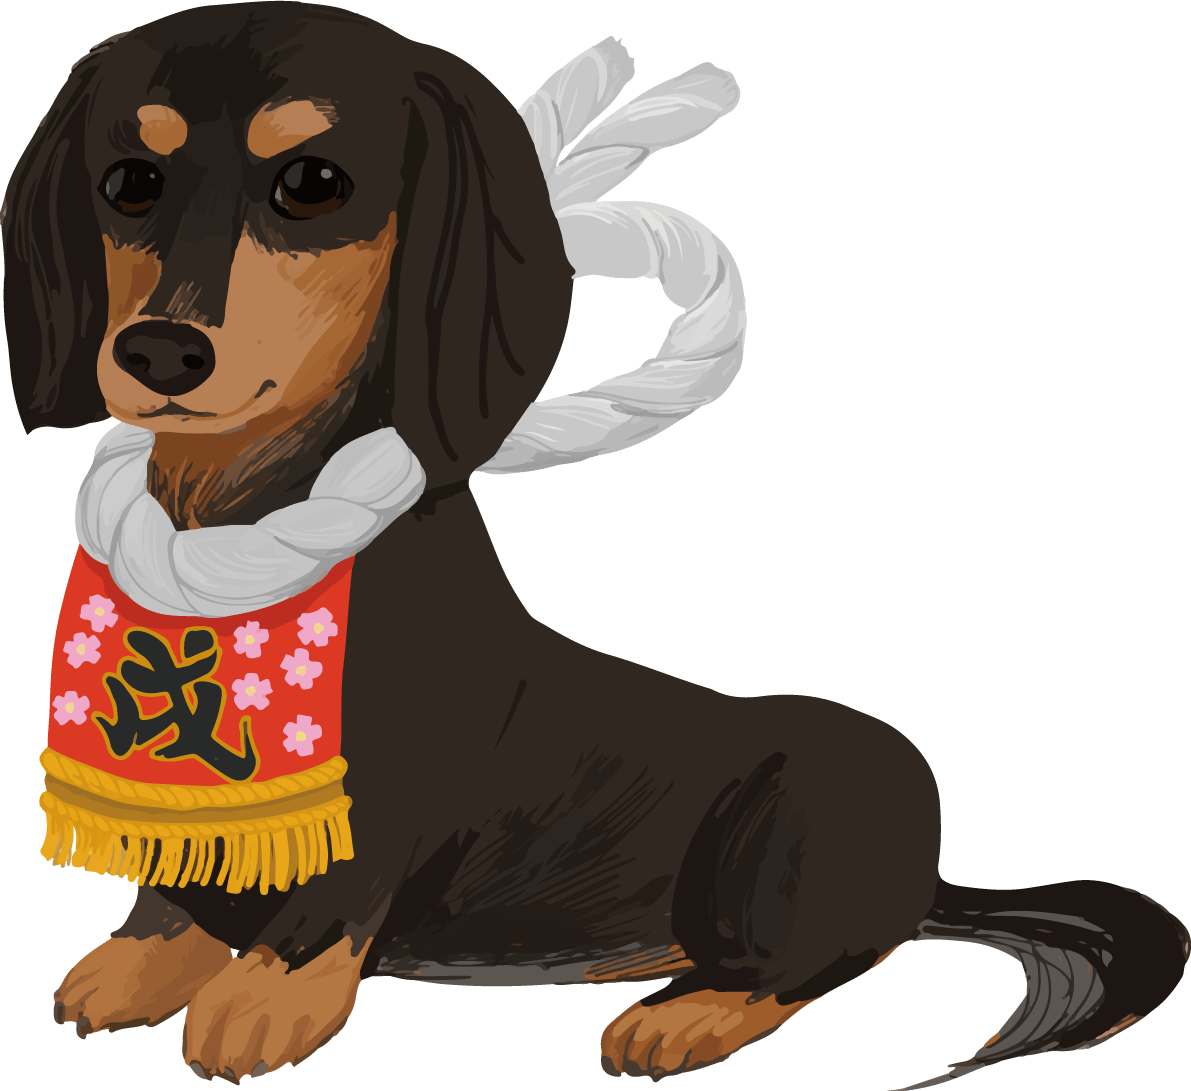 miniature-dachshund-dog-makeup-turn-year-2018-zodiac-illustration